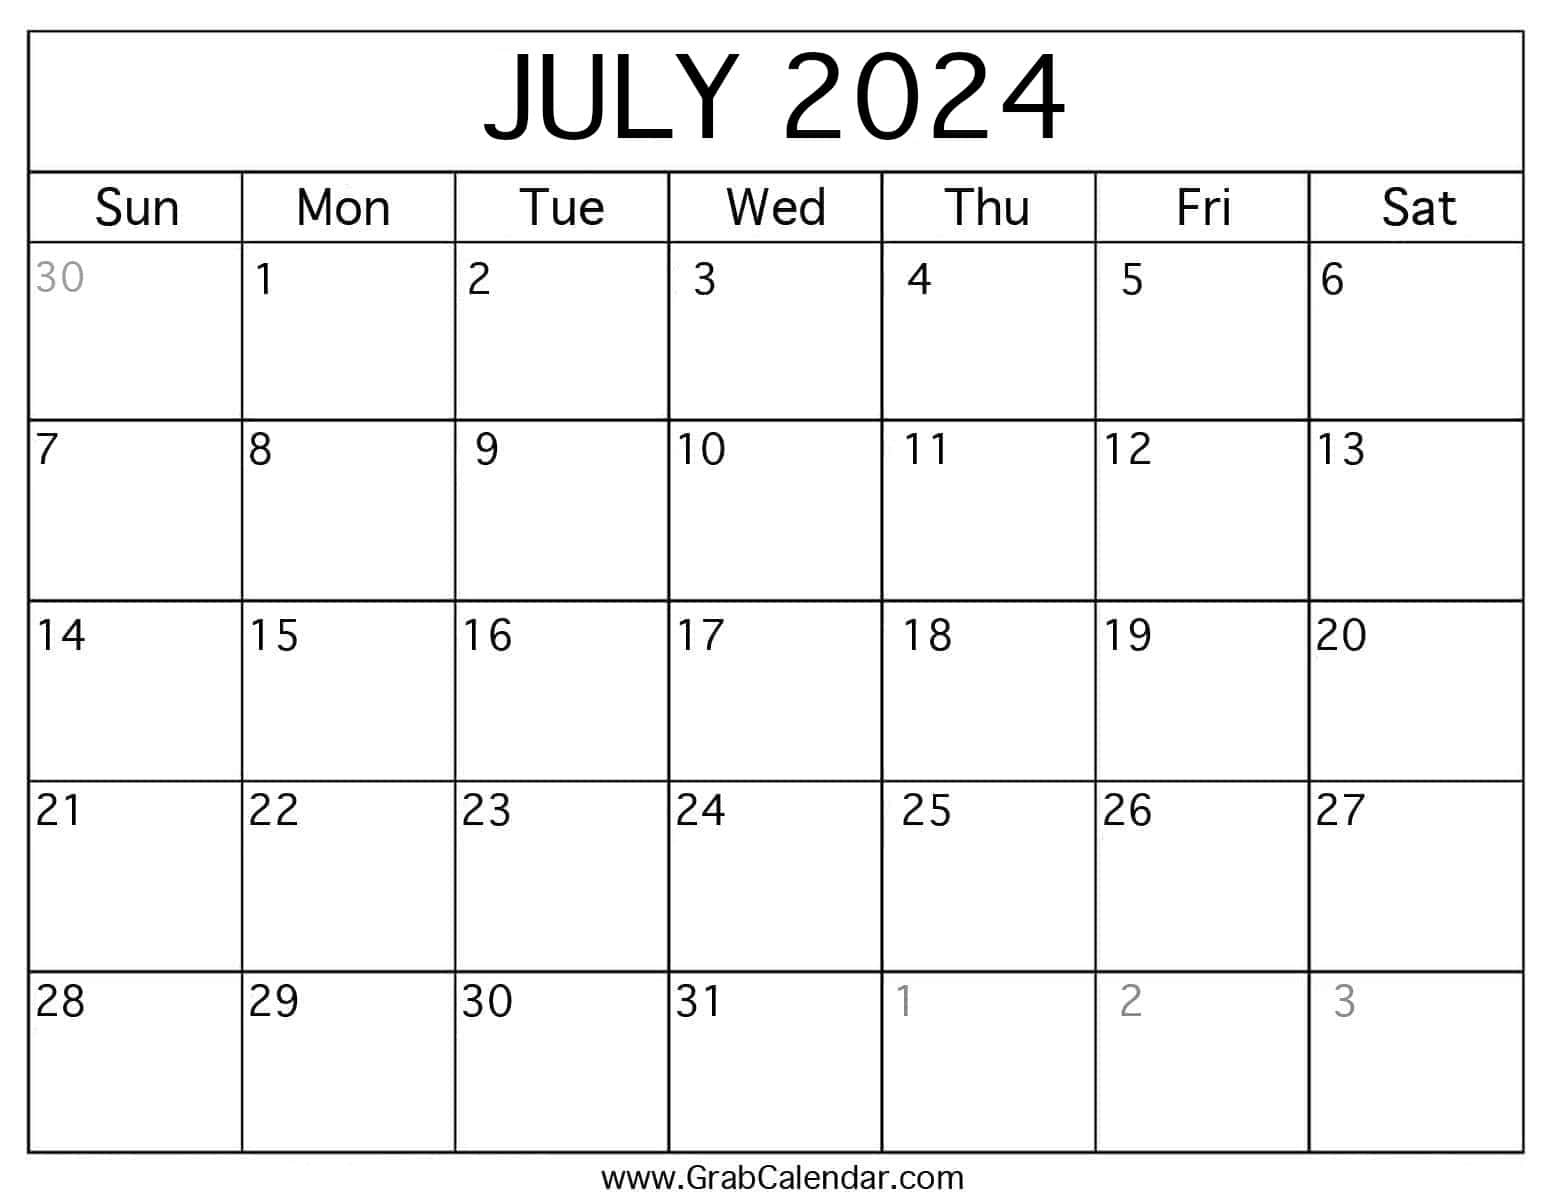 Printable July 2024 Calendar pertaining to Image of July Calendar 2024